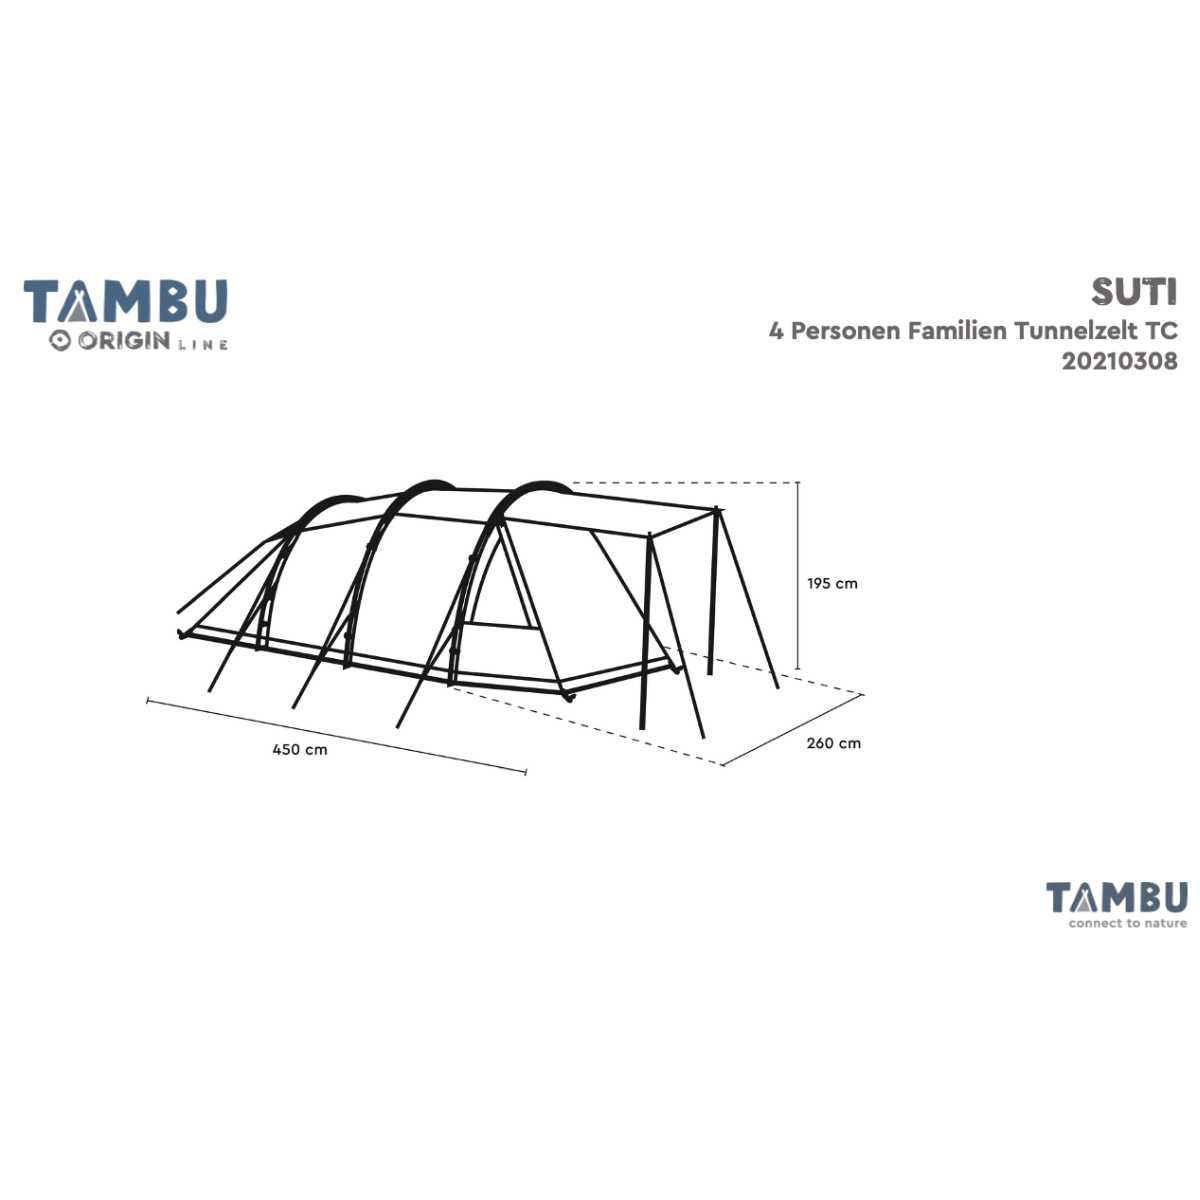 TAMBU SUTI TC Familien Tunnelzelt Graublau 4 Personen - 20210308